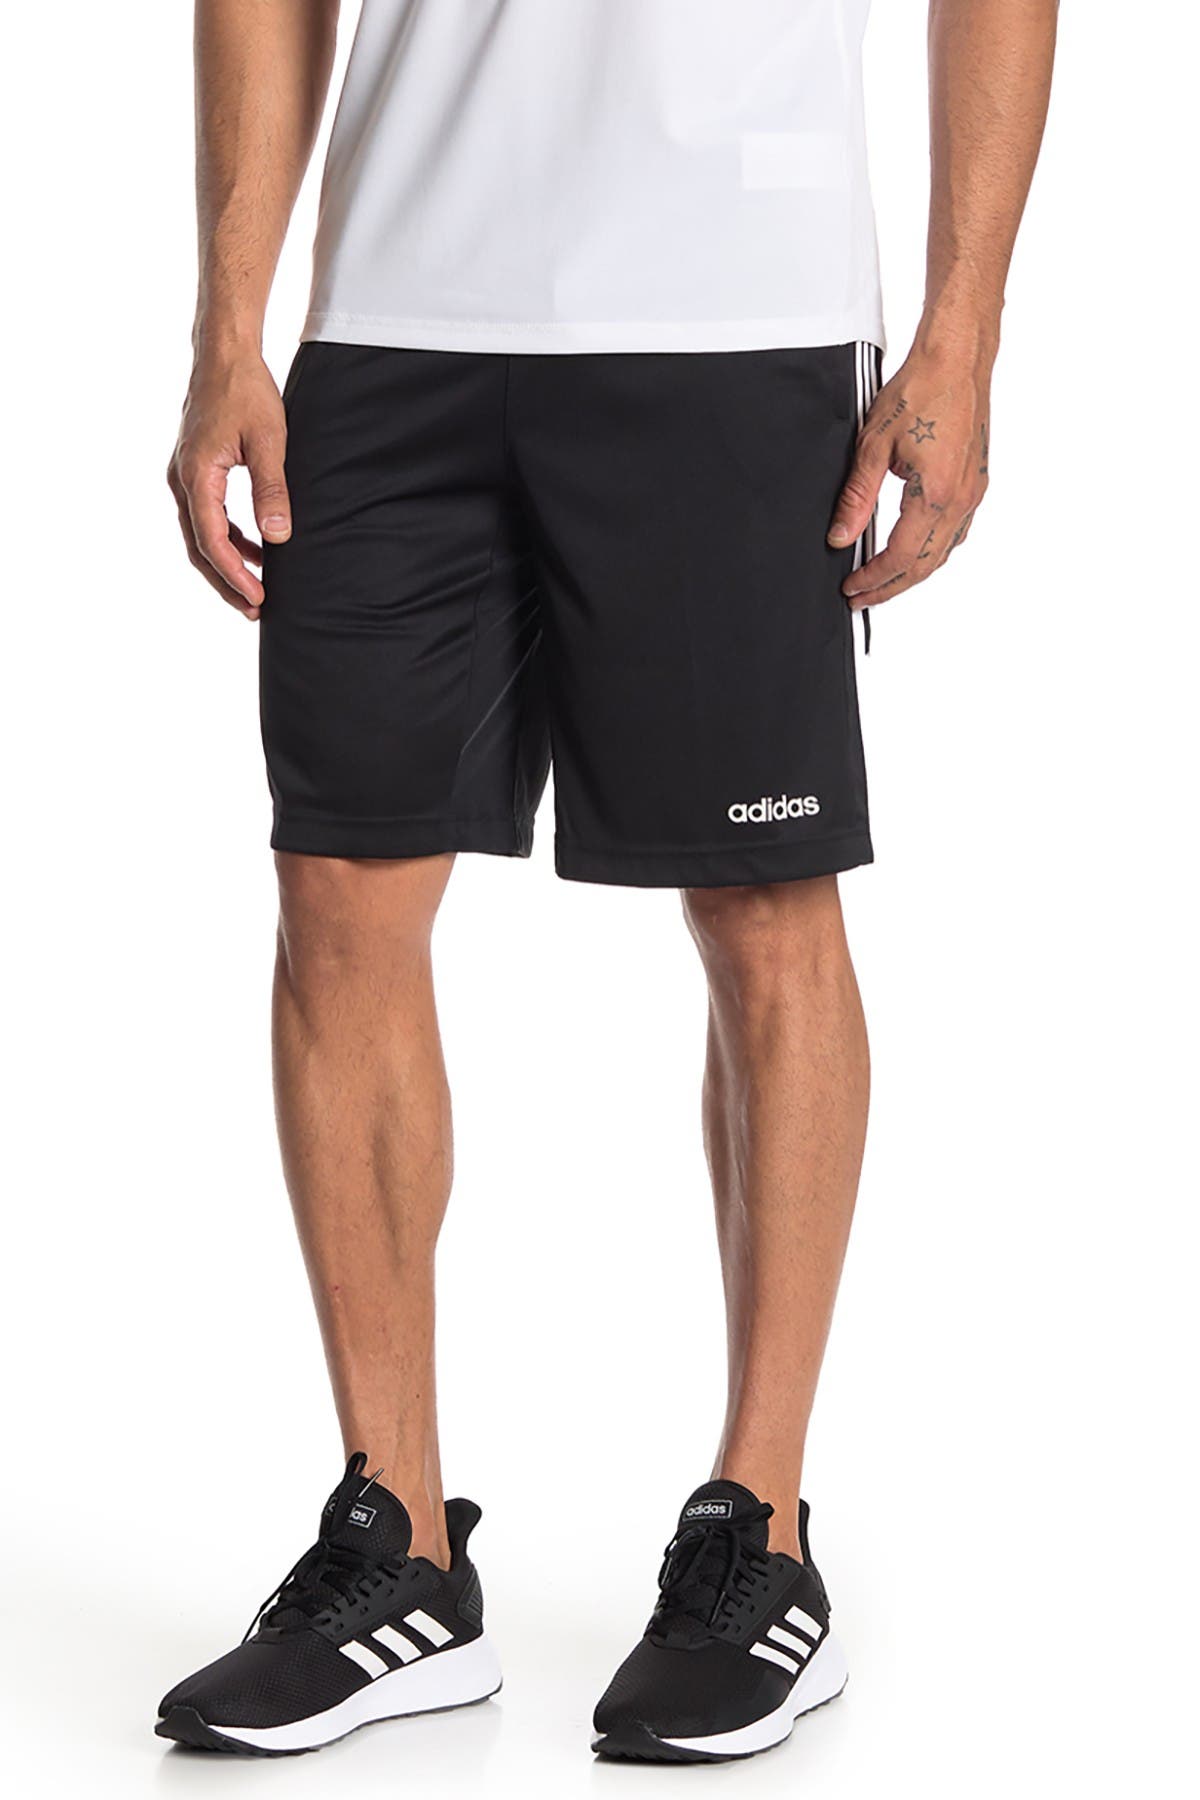 adidas design 2 move climacool shorts